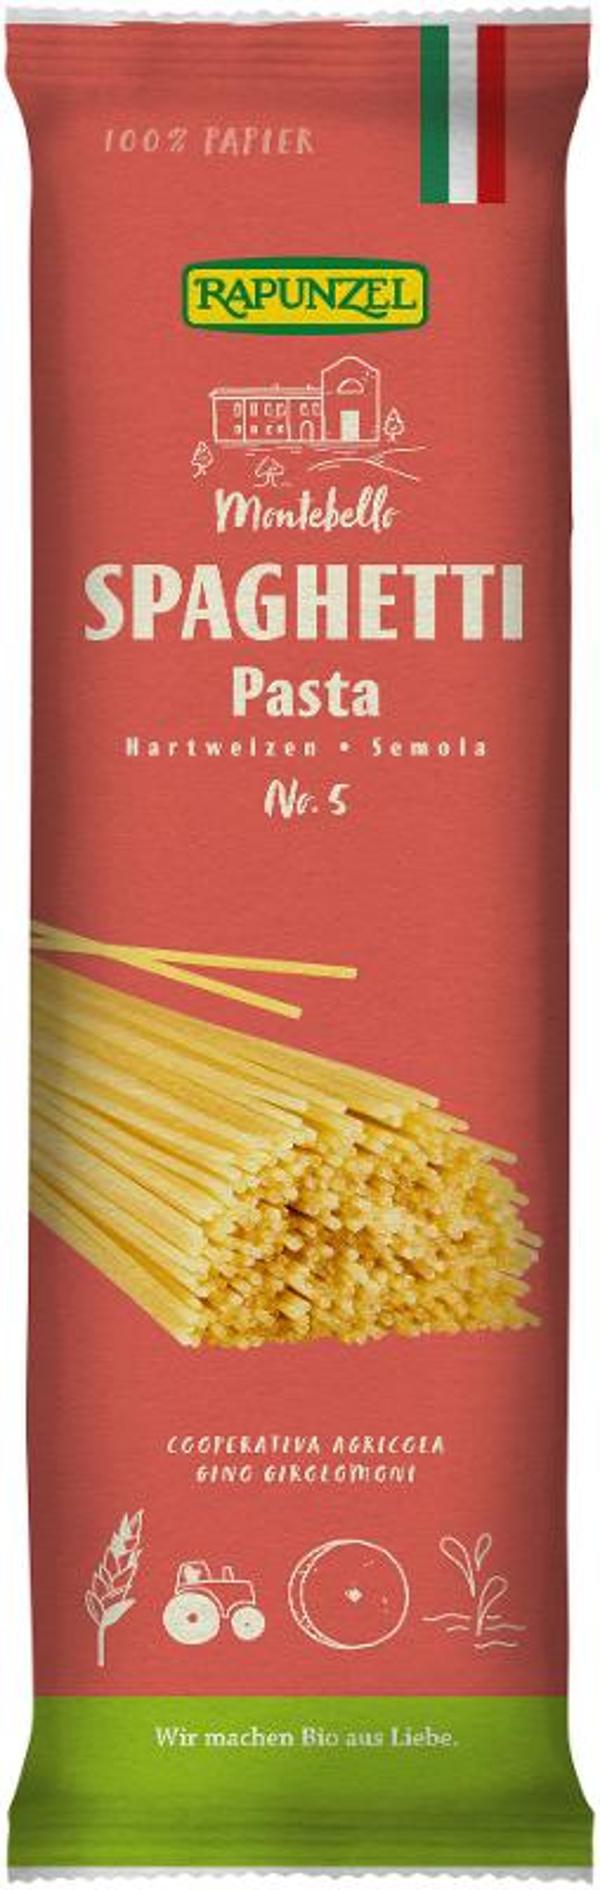 Produktfoto zu Spaghetti hell, 500g